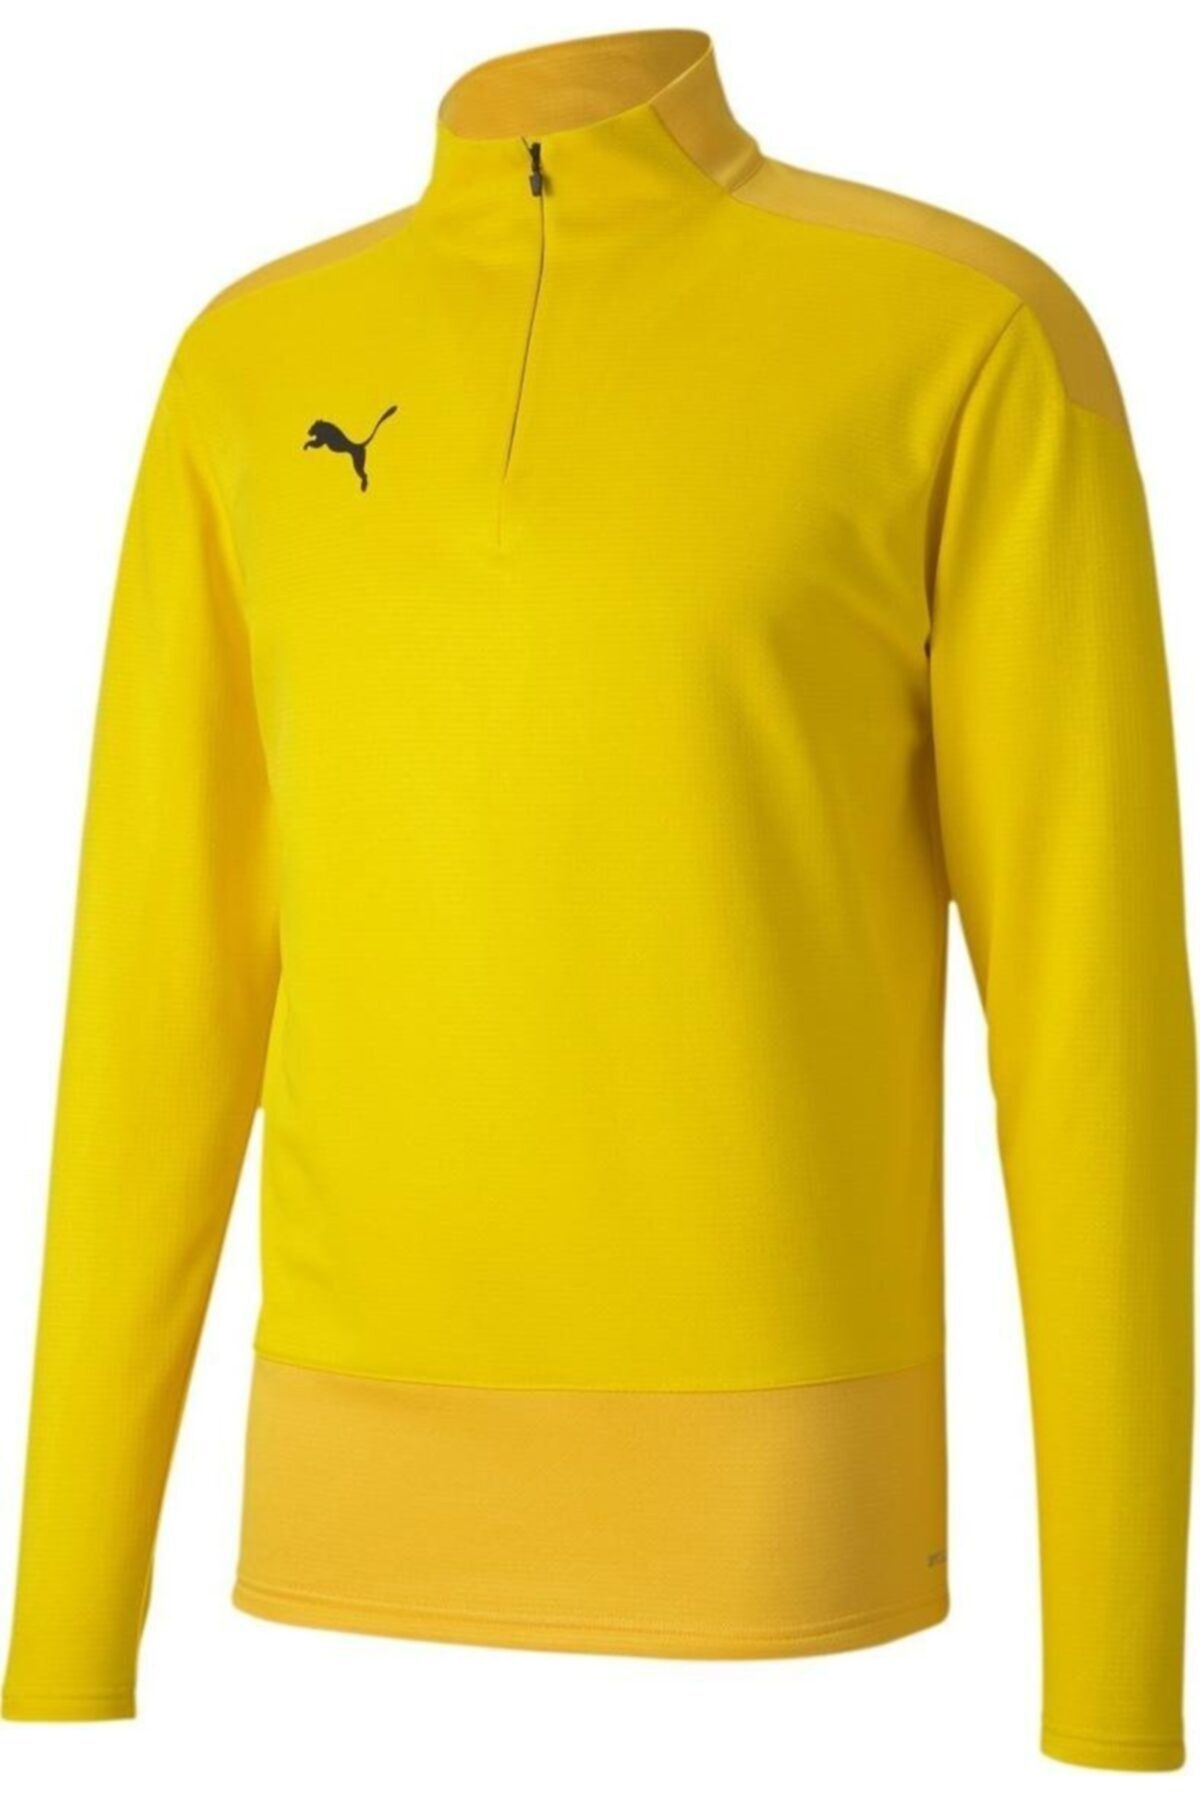 Puma Erkek Sarı Sweatshirt 65647607